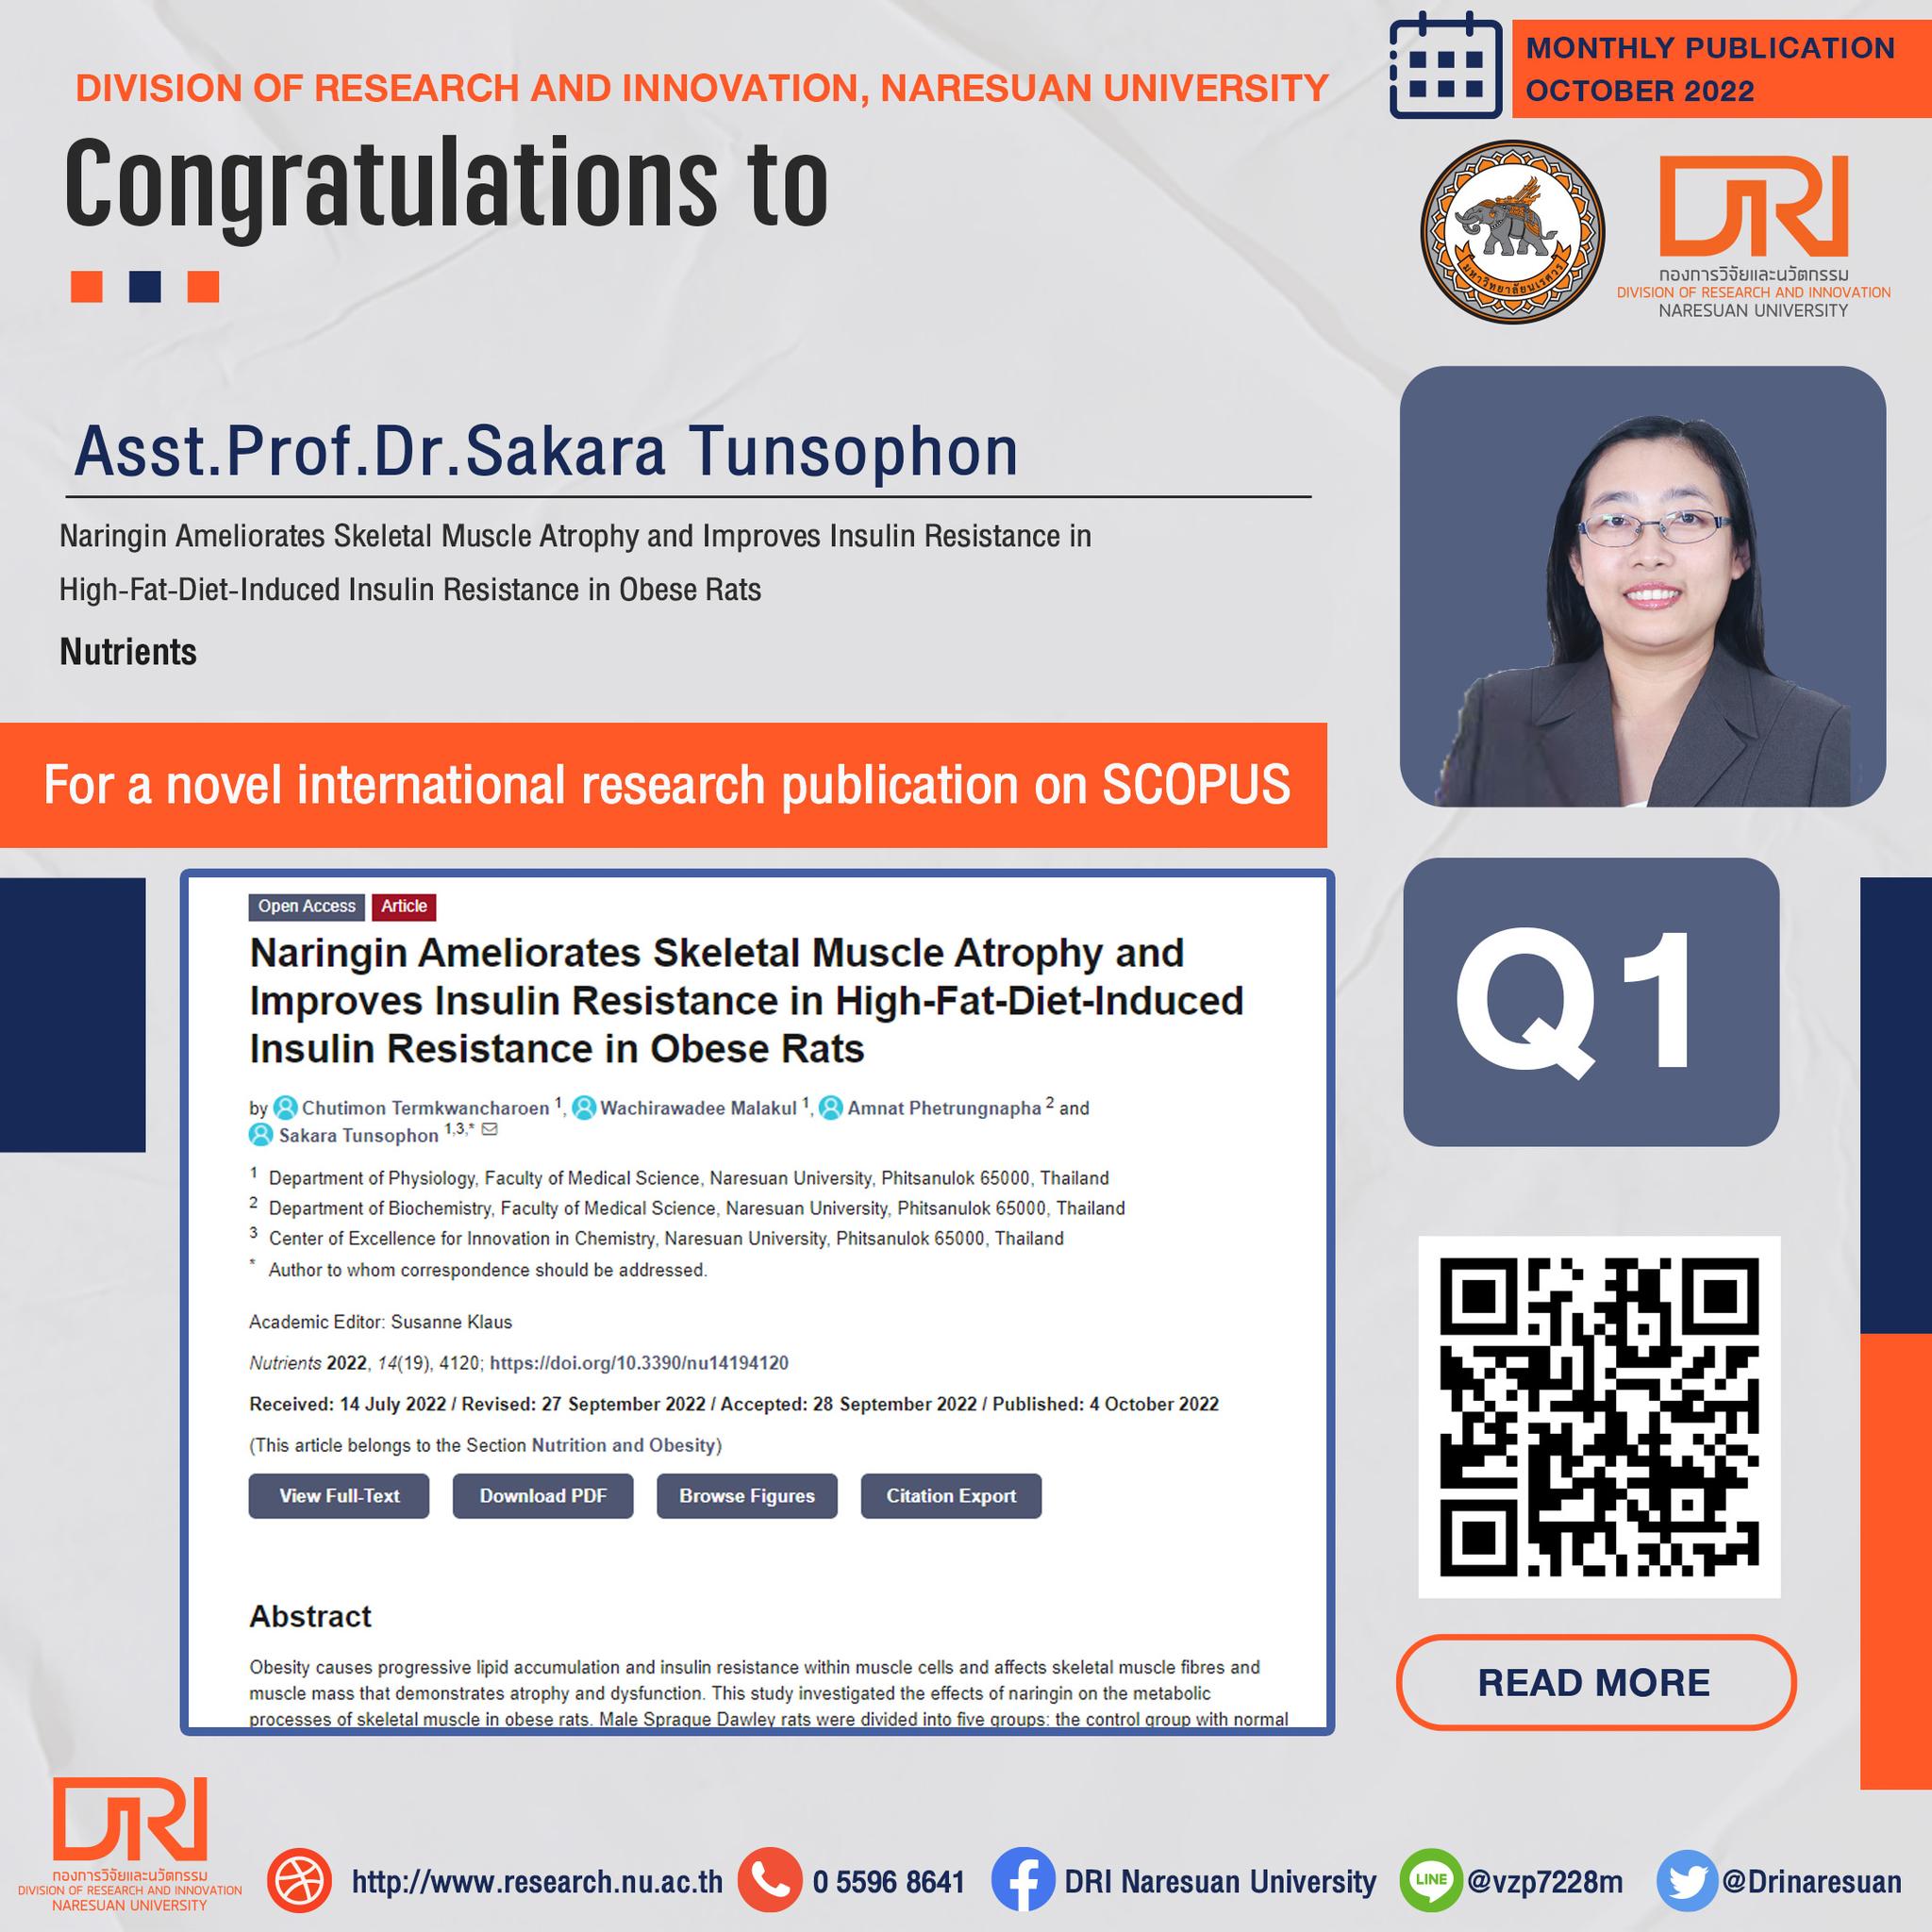 Congratulations to Asst.Prof.Dr.Sakara Tunsophon